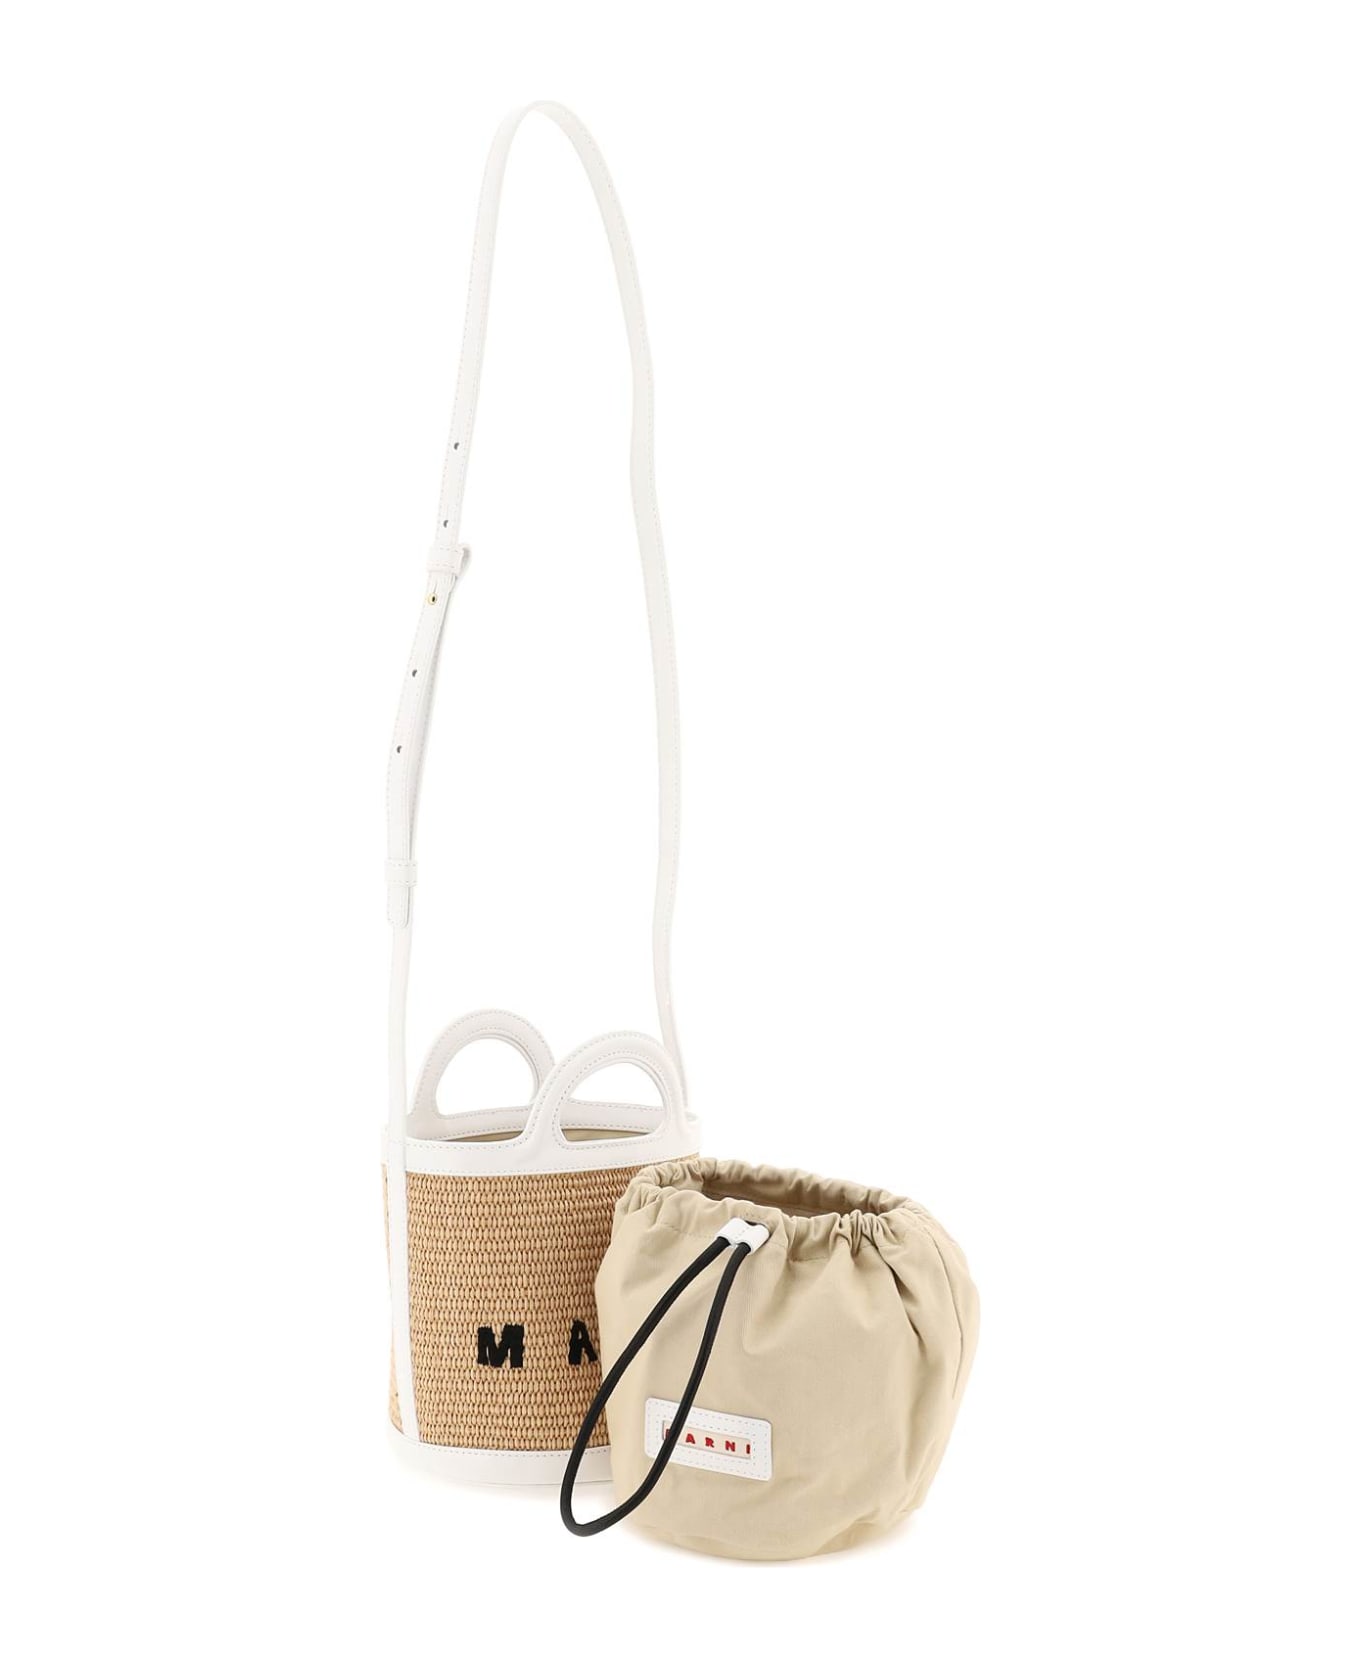 Marni Tropicalia Mini Bag In White Leather And Natural Raffia - White/natural ショルダーバッグ